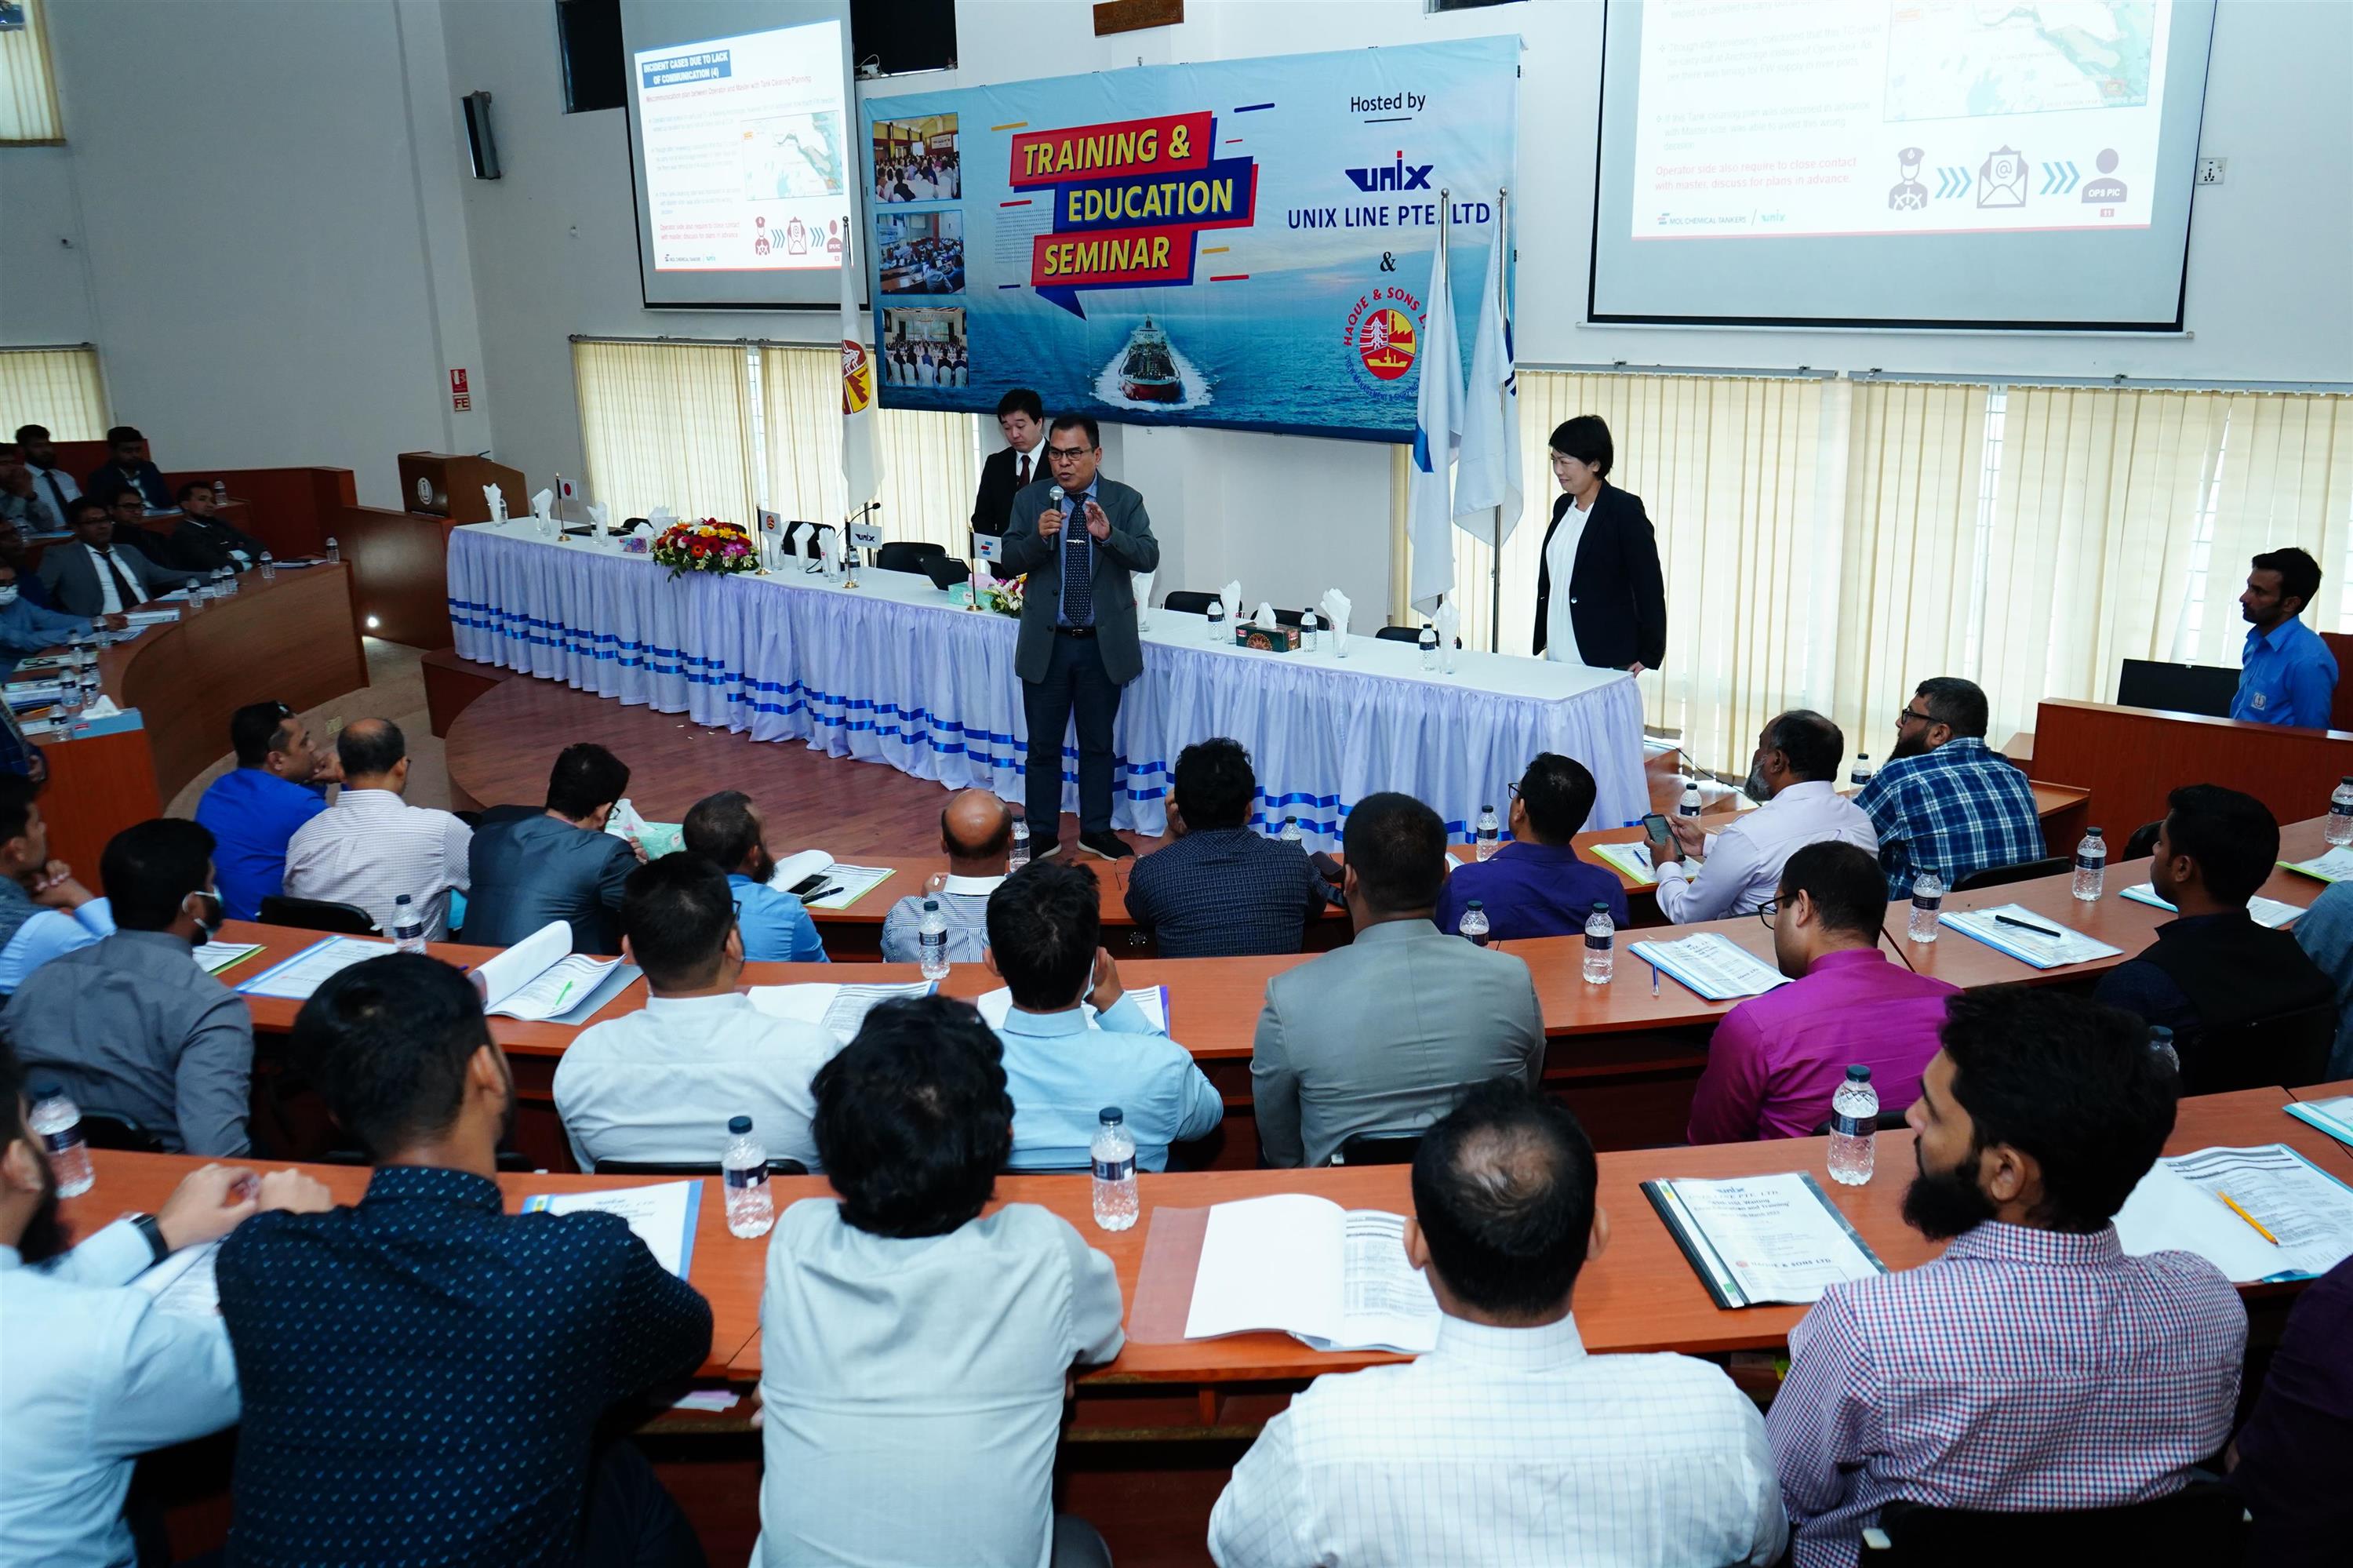 49th Training and Education Seminar of Unix Line Pte Ltd